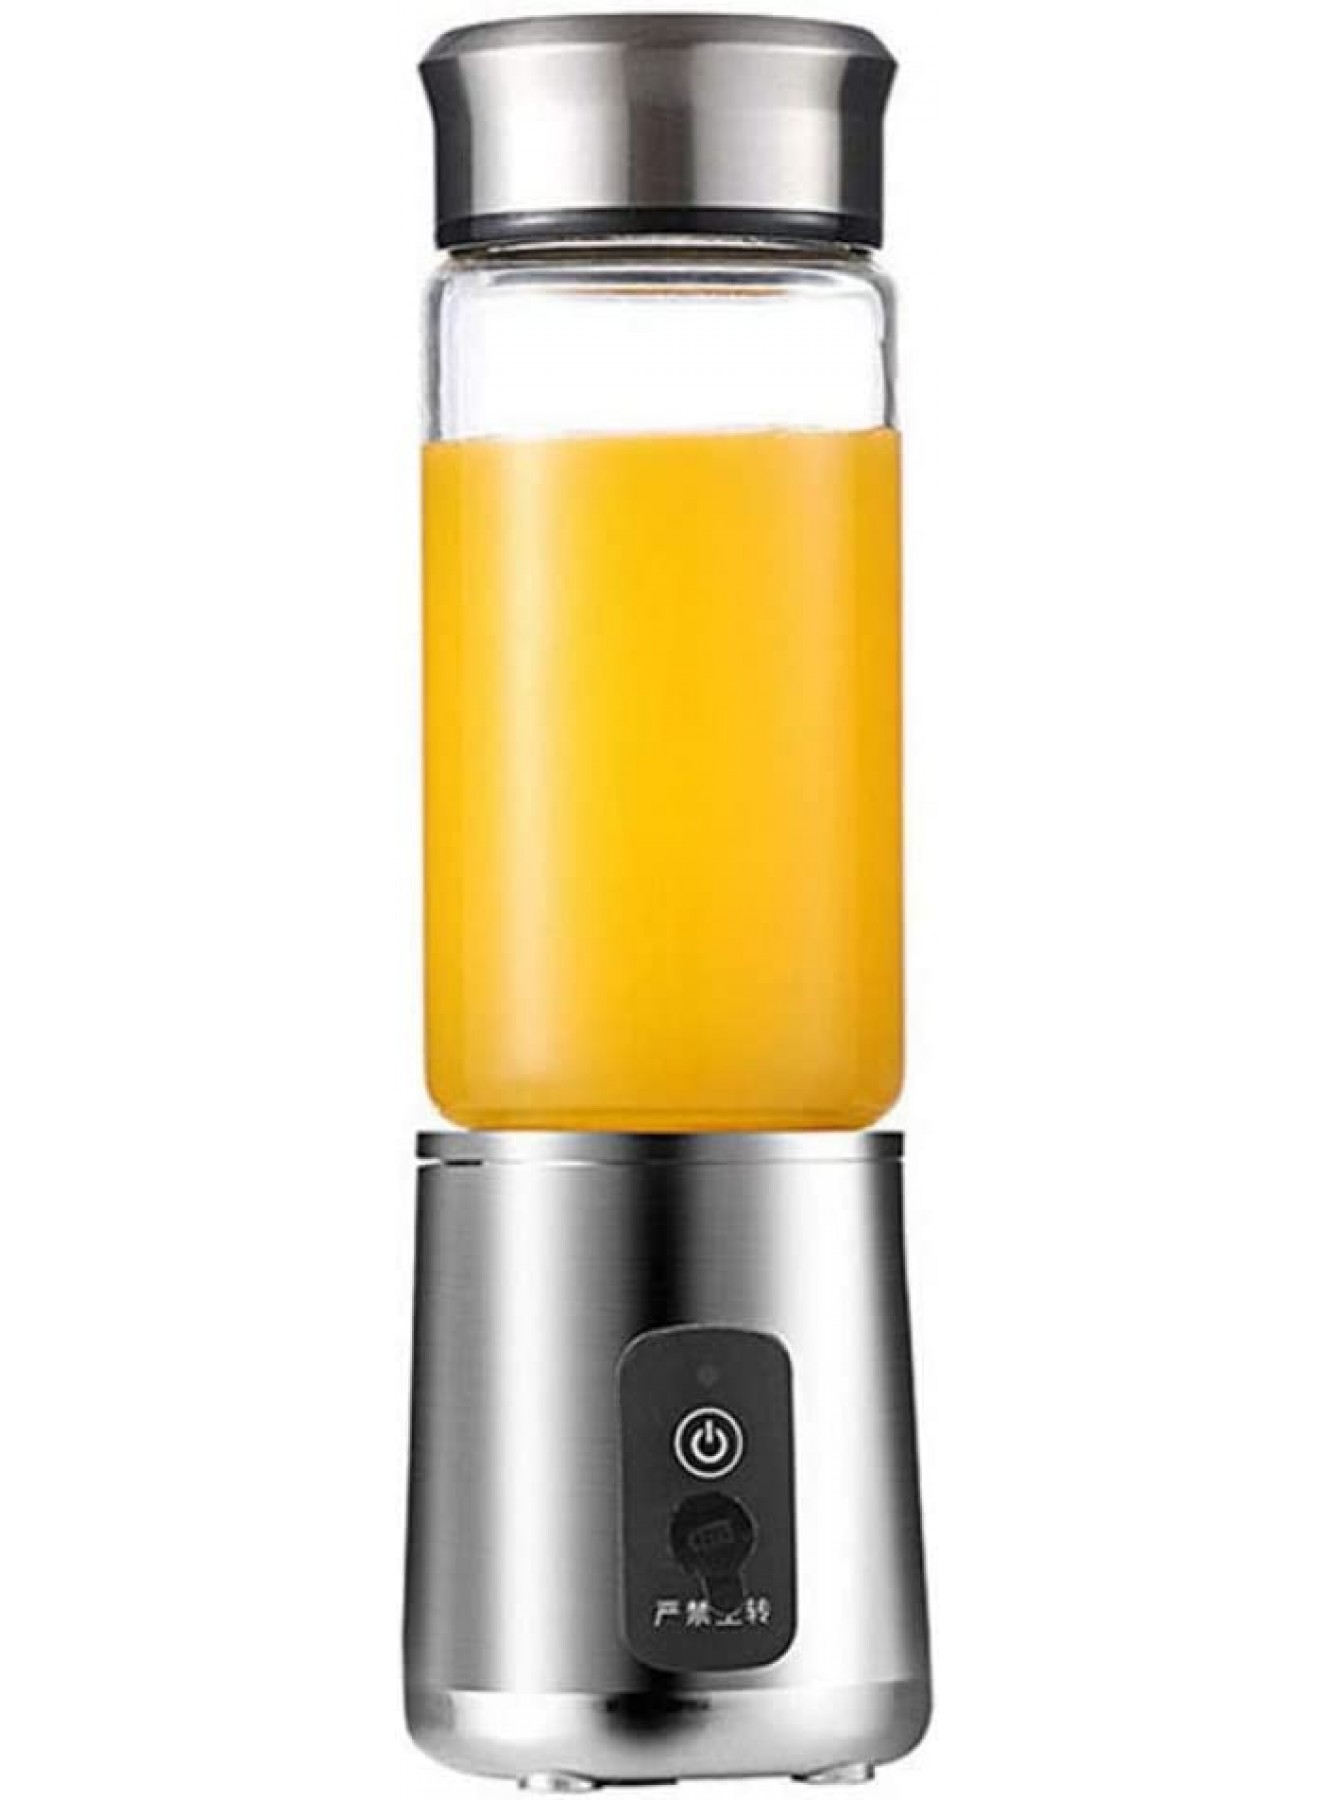 JNLOTBVDC 380Ml Portable Juicer Multifunction Cut Mixer Usb Charging Blender Juice Cup Fruit Extractors Juice Maker B07WTNVQQZ